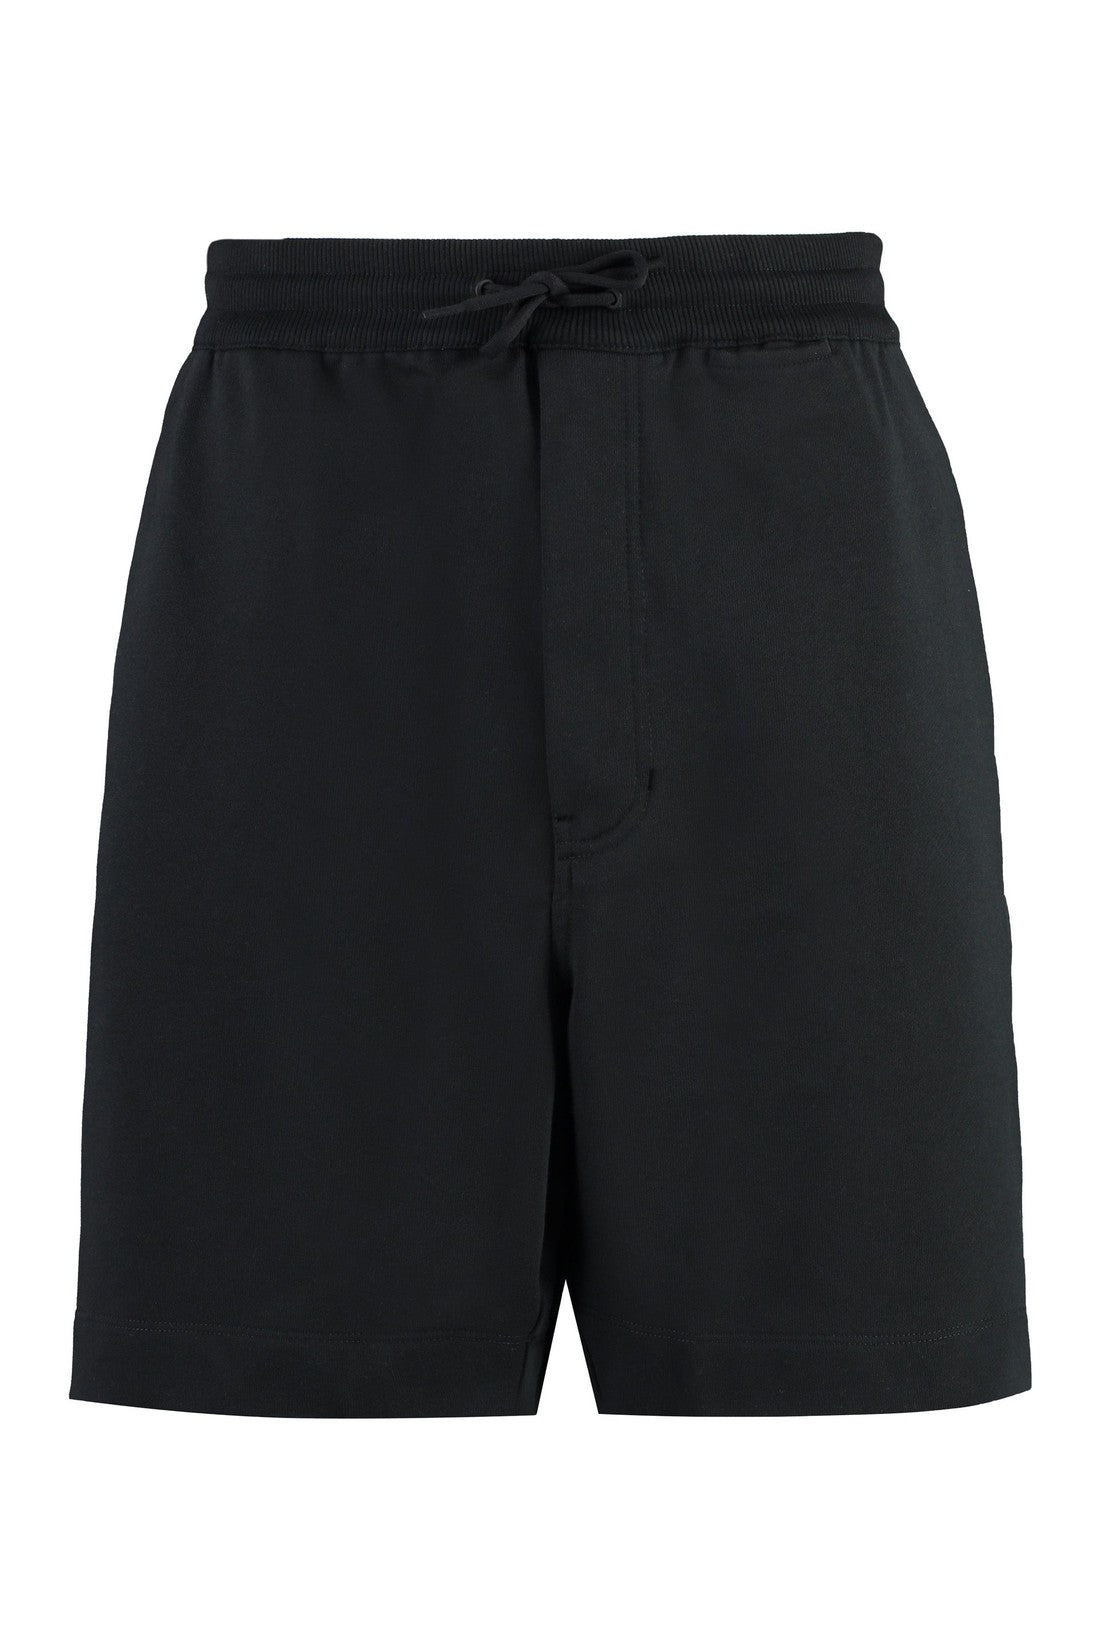 adidas Y-3-OUTLET-SALE-Fleece shorts-ARCHIVIST